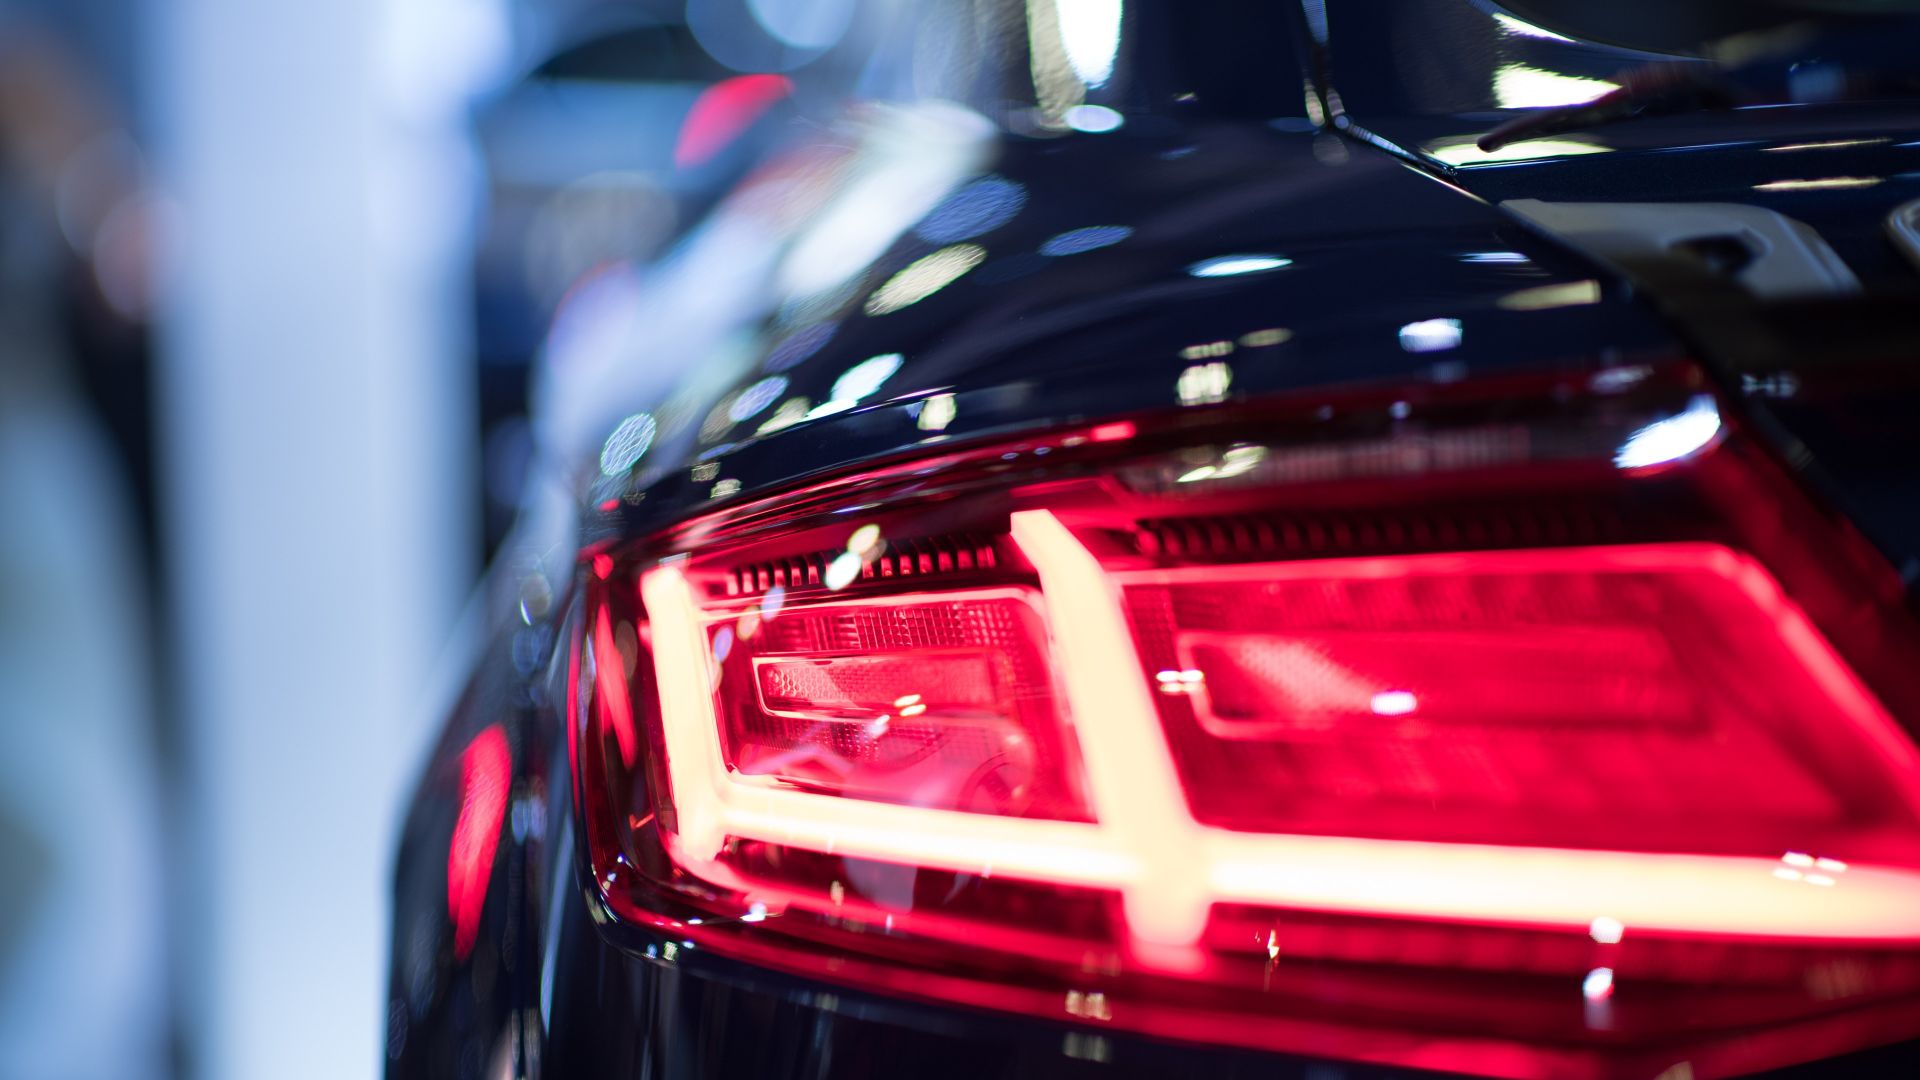 Desktop Wallpaper Audi Car, Taillights, Hd Image, Picture, Background,  2fslqr